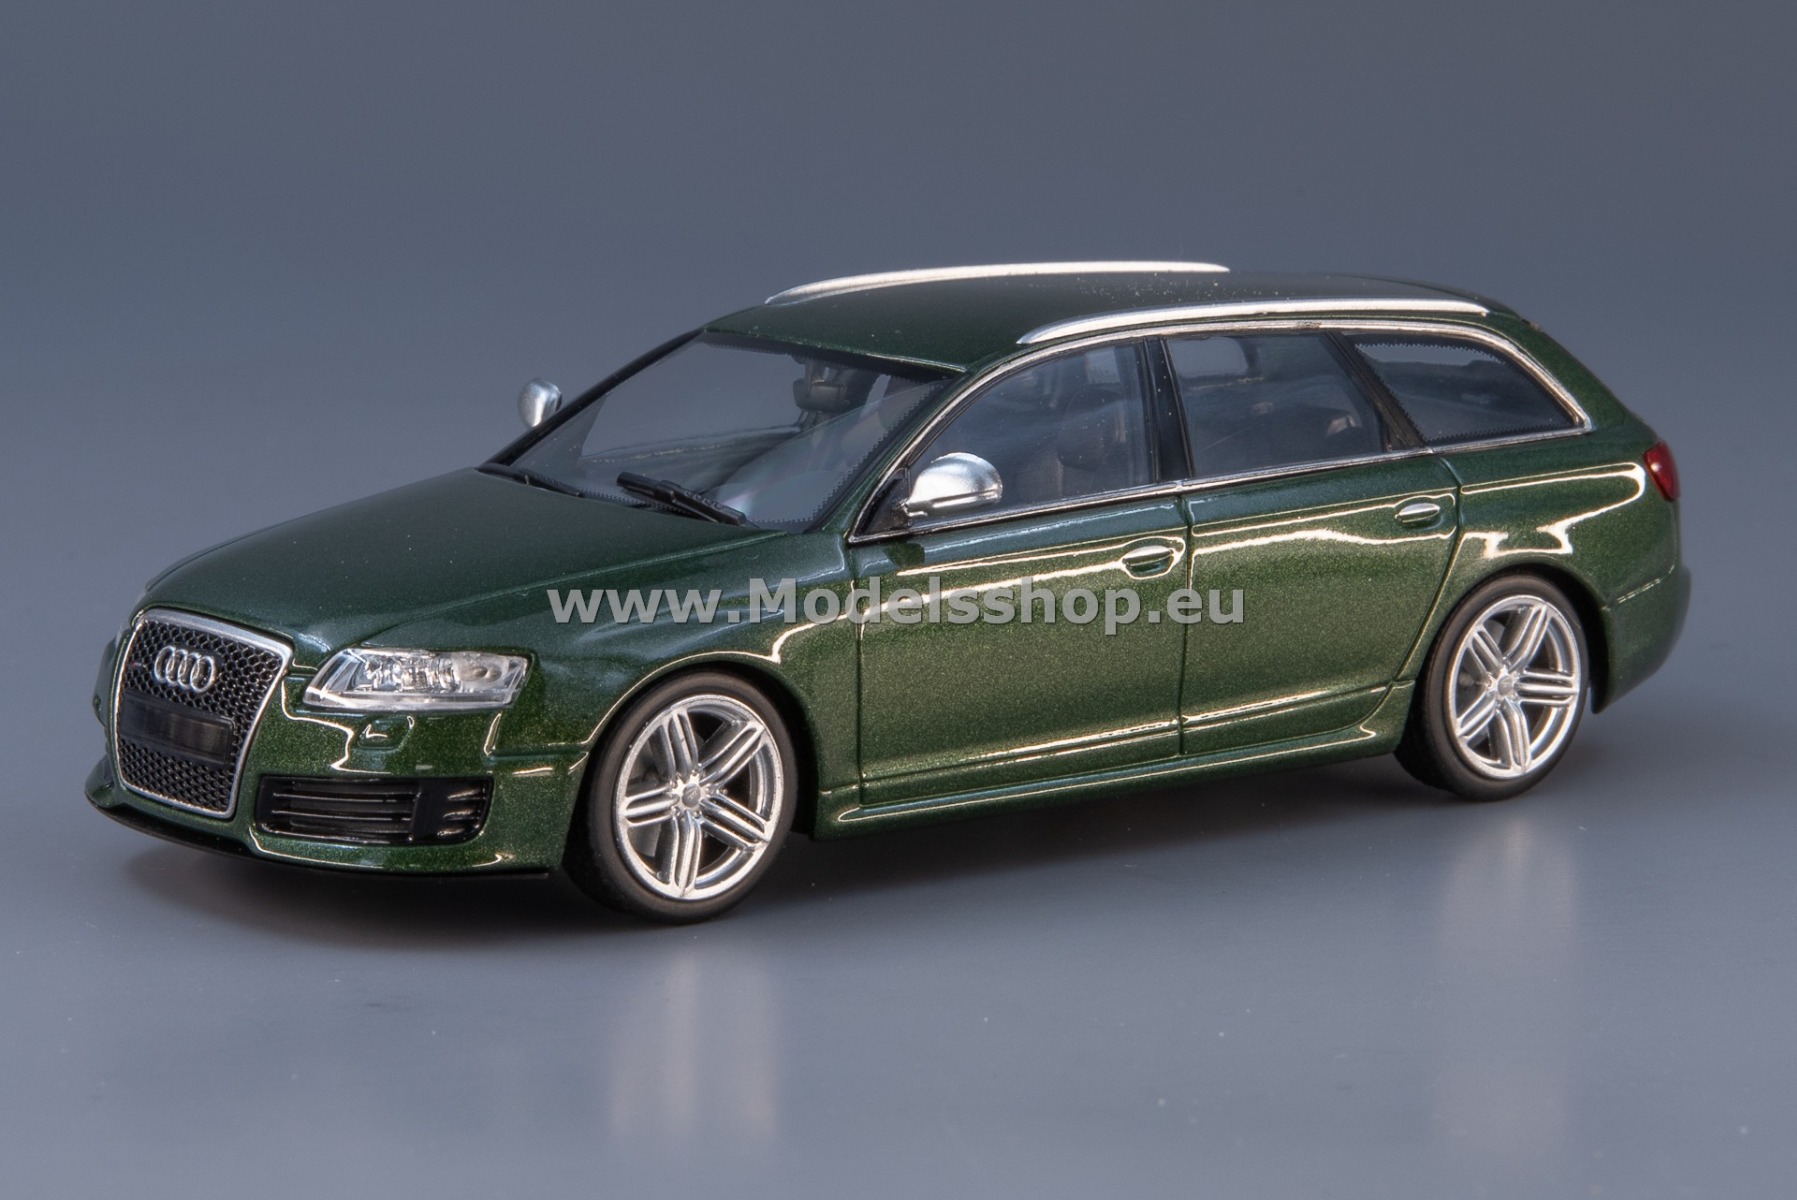 Maxichamps 940017210 Audi RS6 Avant, 2007 /green metallic/